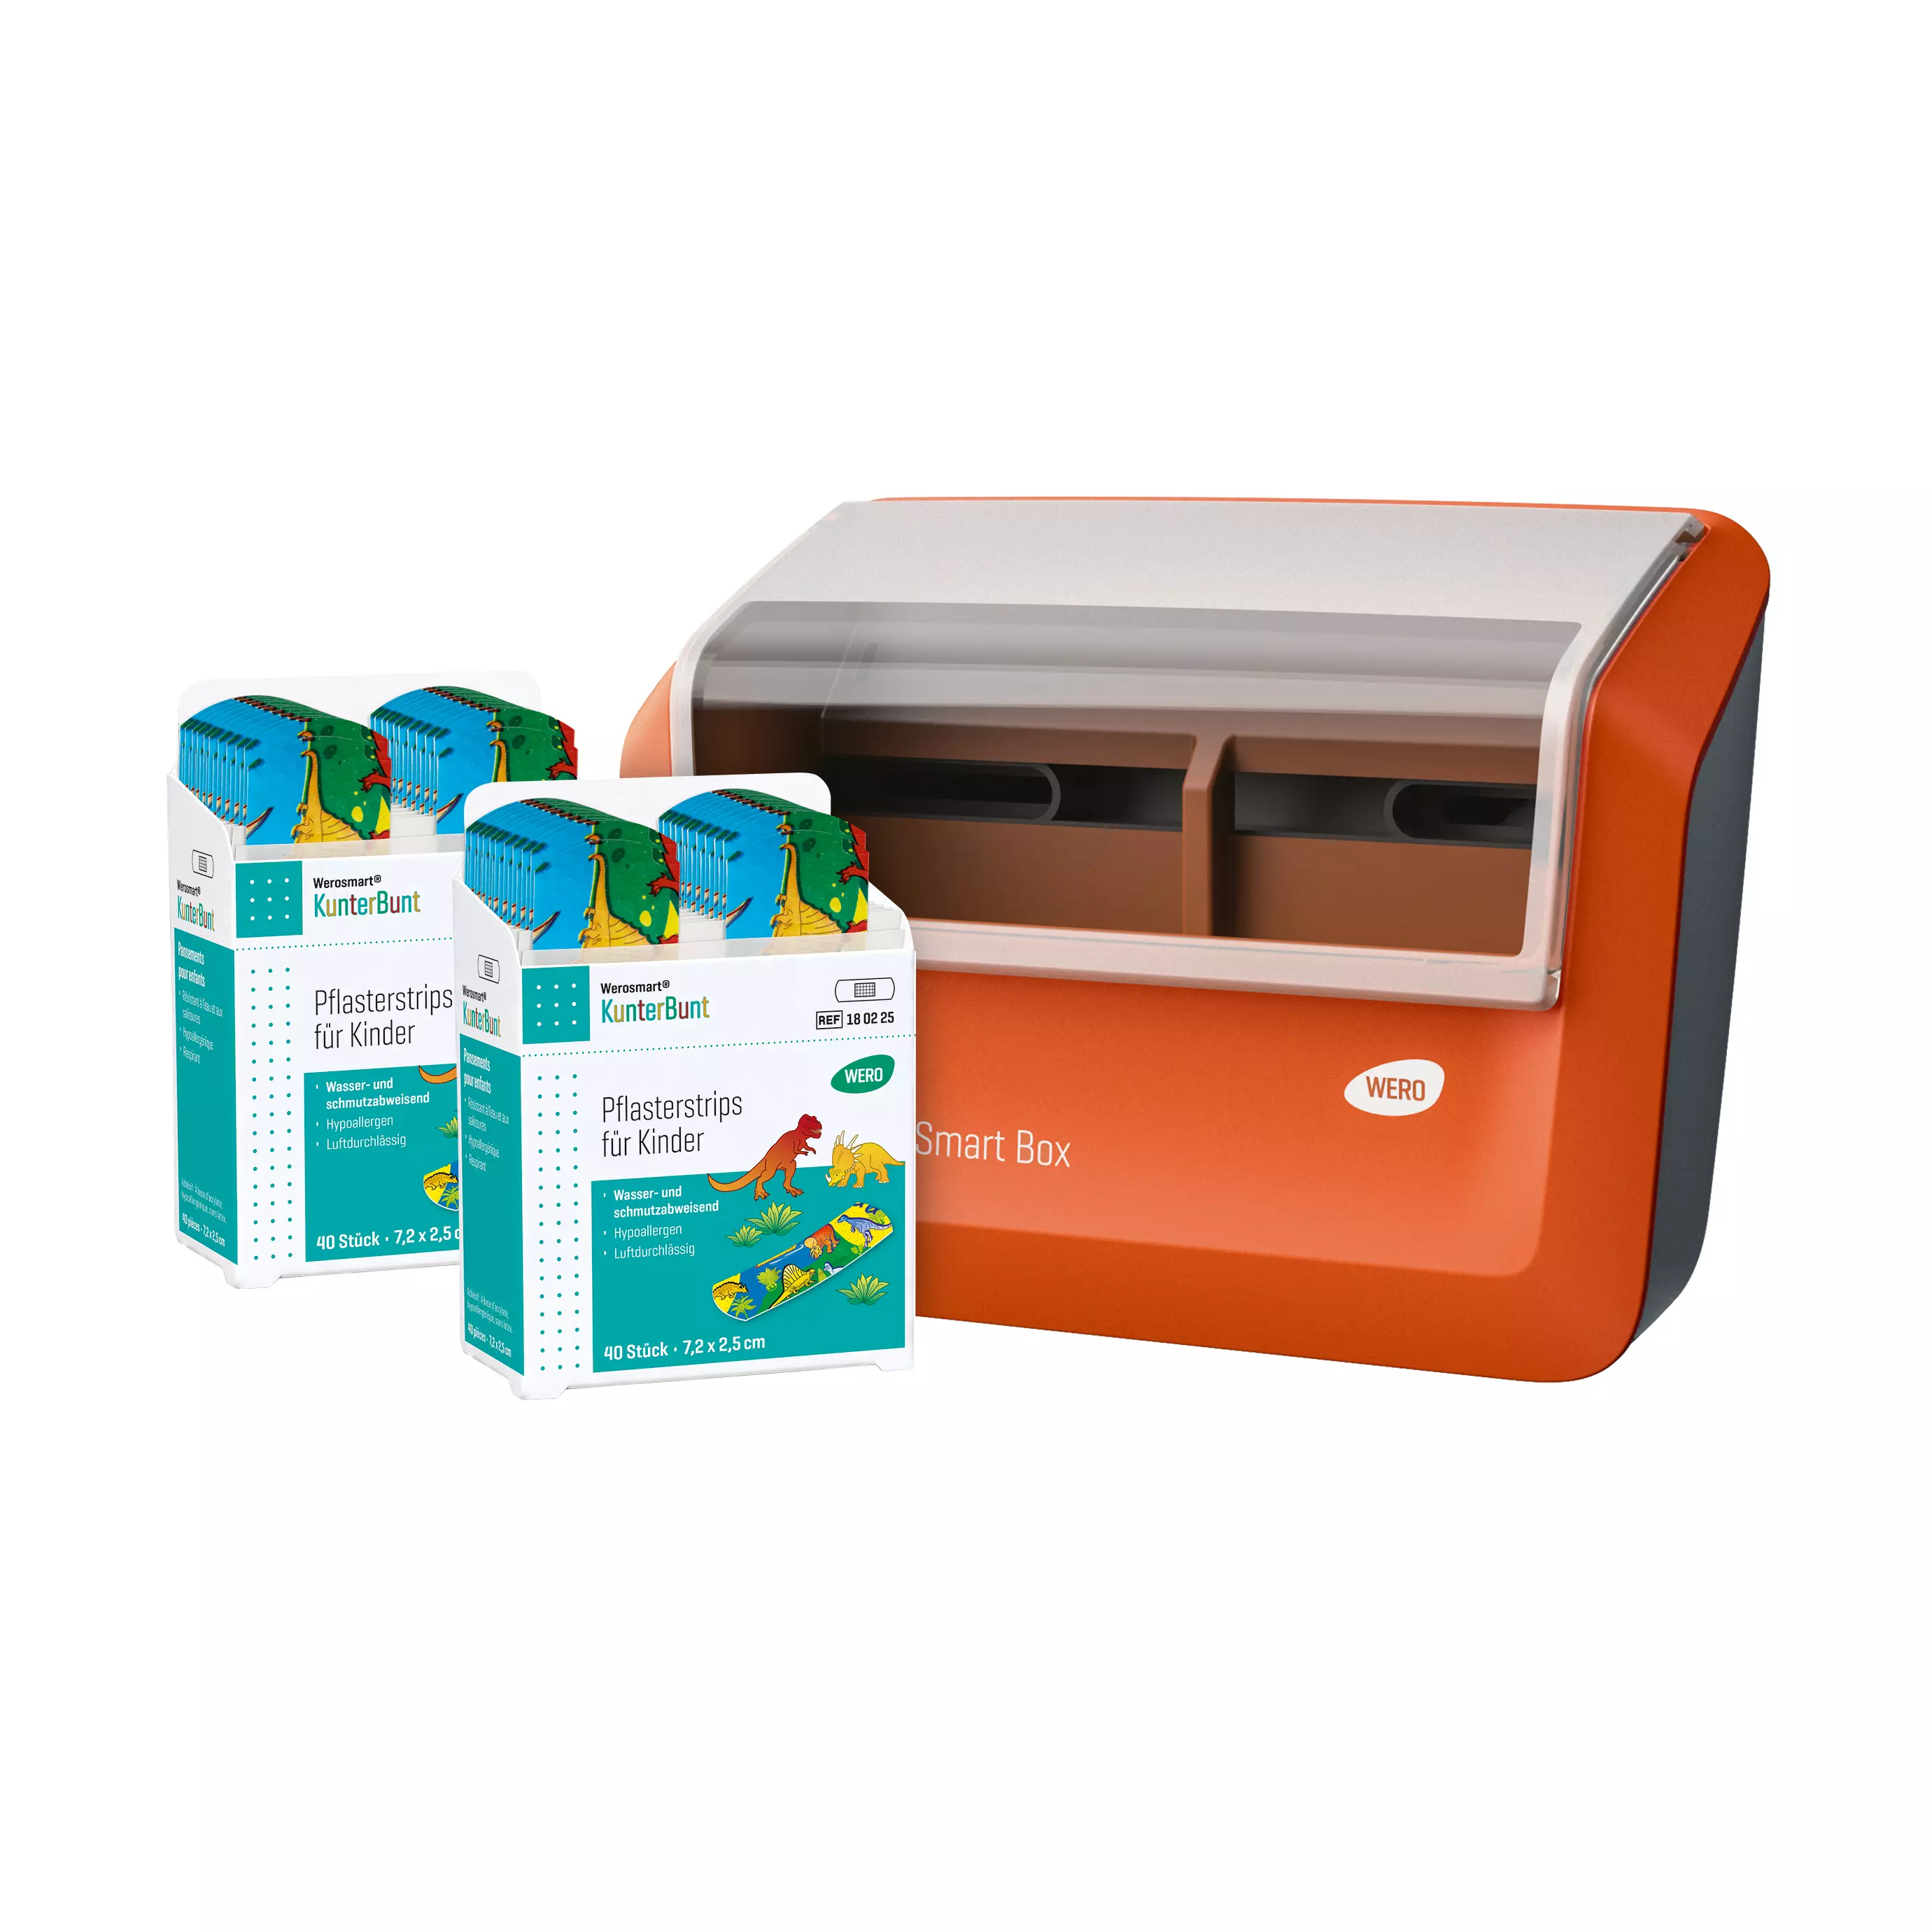 WERO Smart Box® plaster dispenser filled with Werosmart KunterBunt plaster strips for children